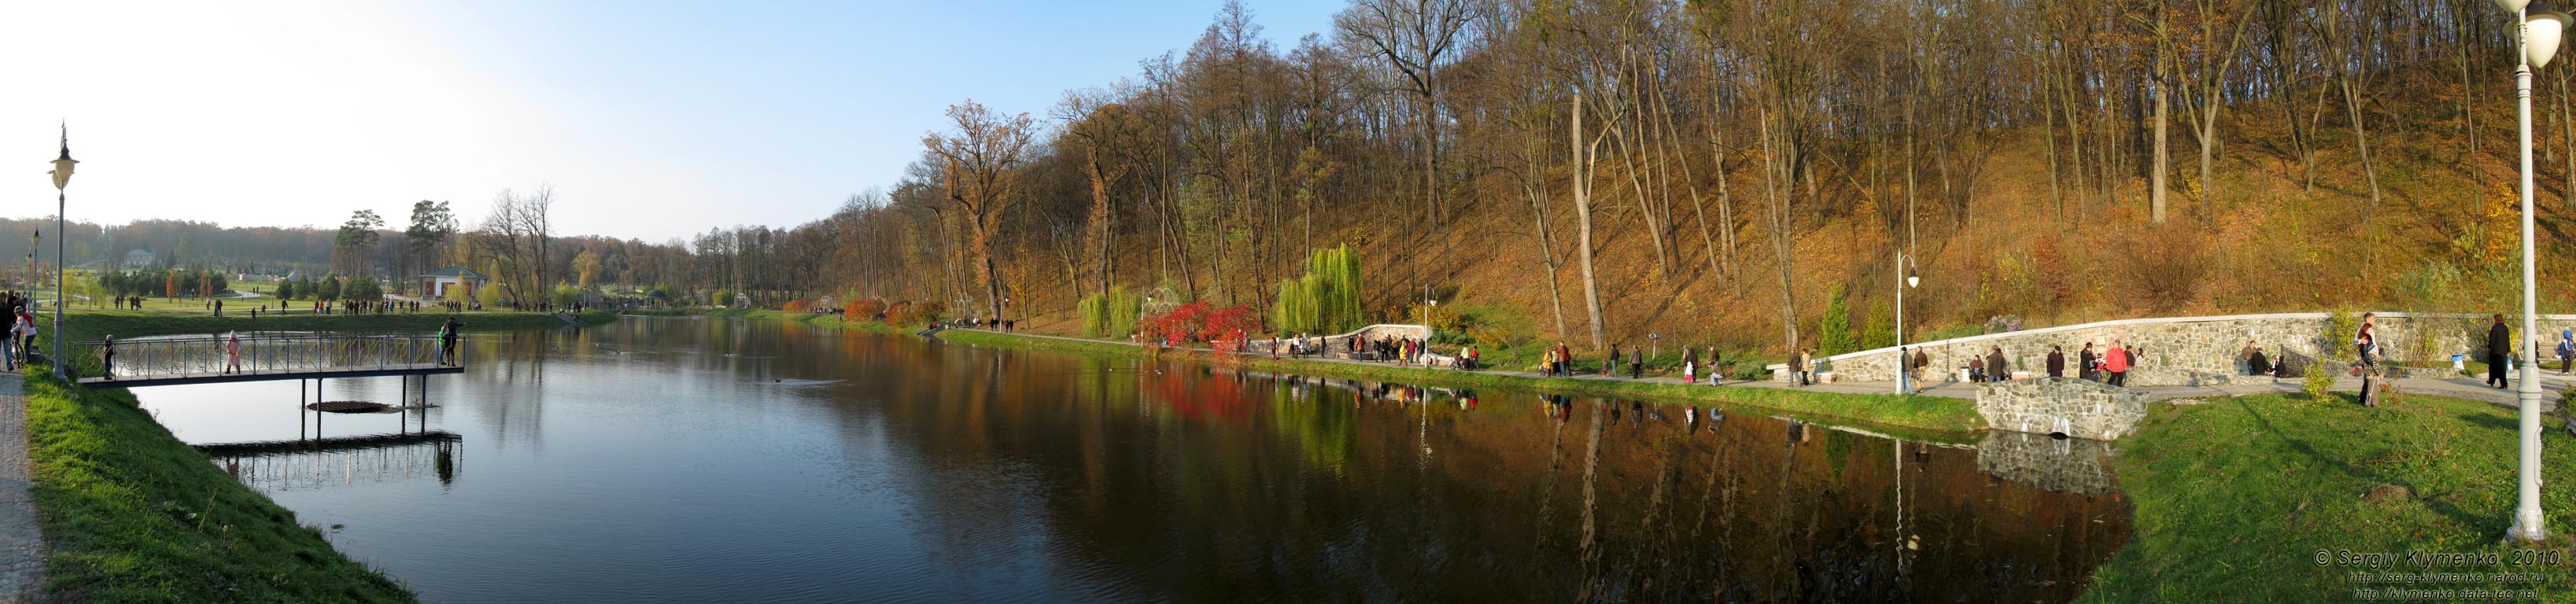 Фото Киева. Парк-памятка садово-паркового искусства «Феофания» (панорама ~120°).